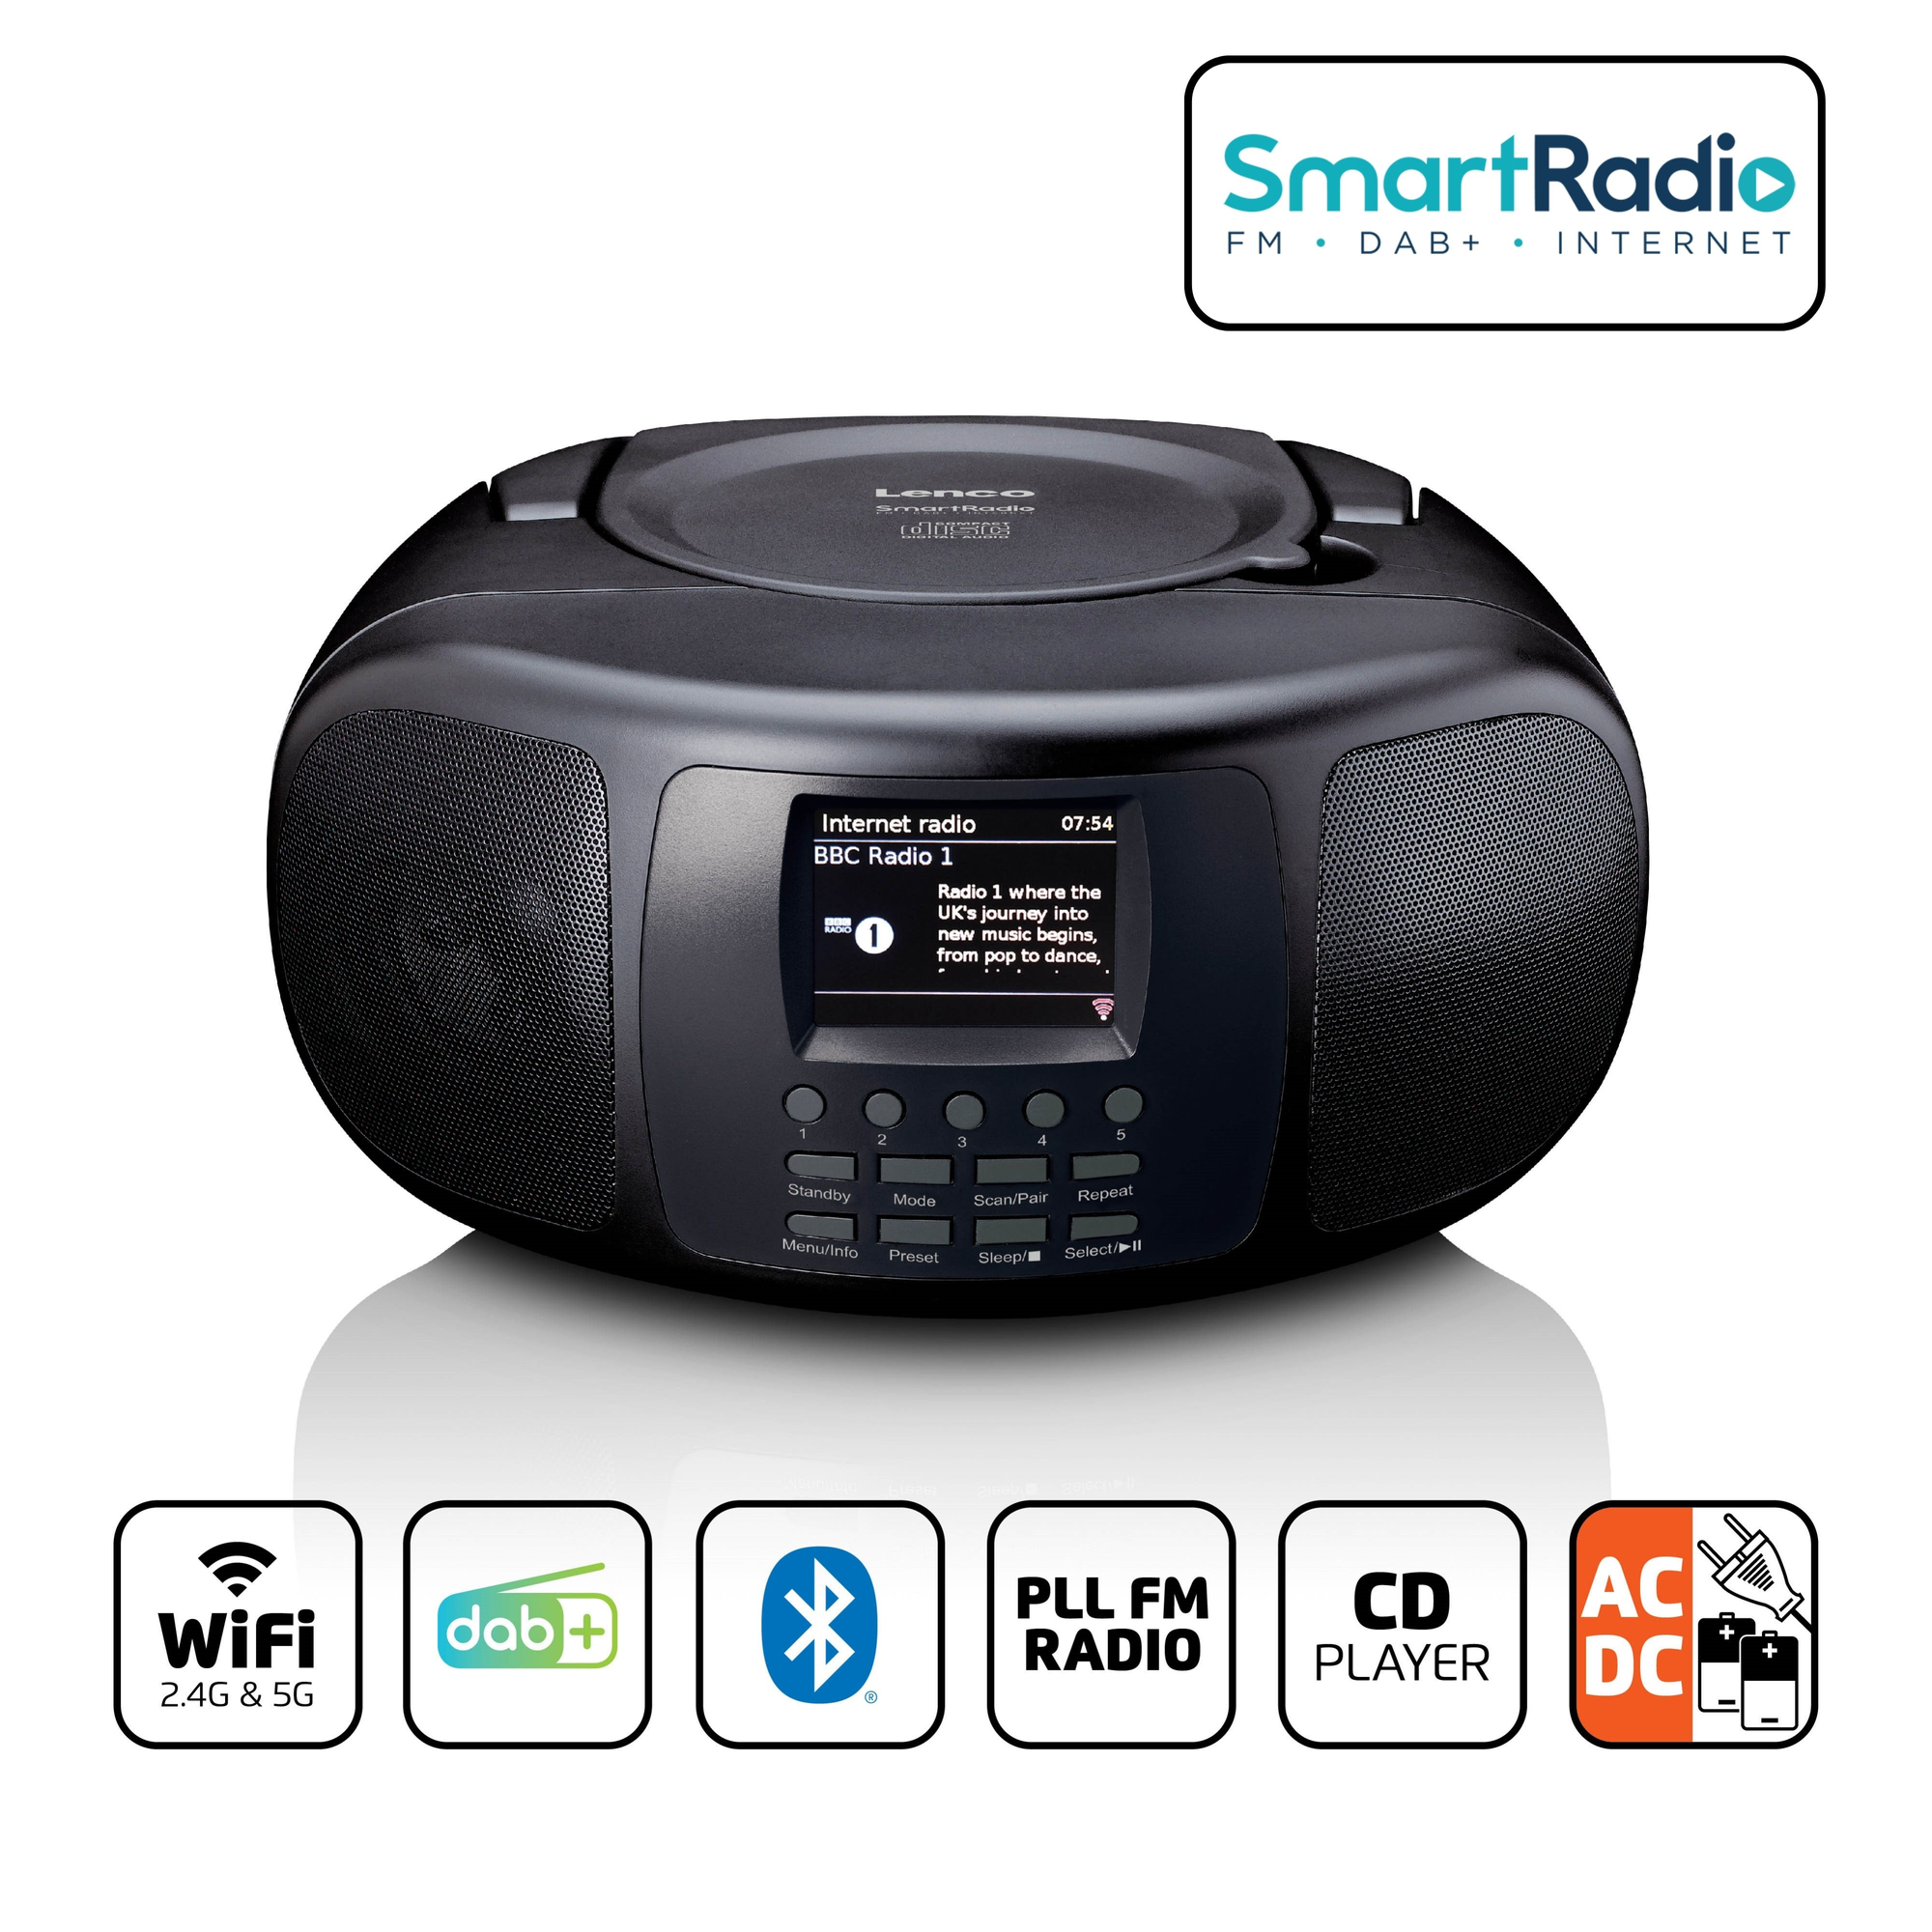 LENCO SCD-6000BK Radio, DAB+, DAB, FM, Internet Bluetooth, Black Radio